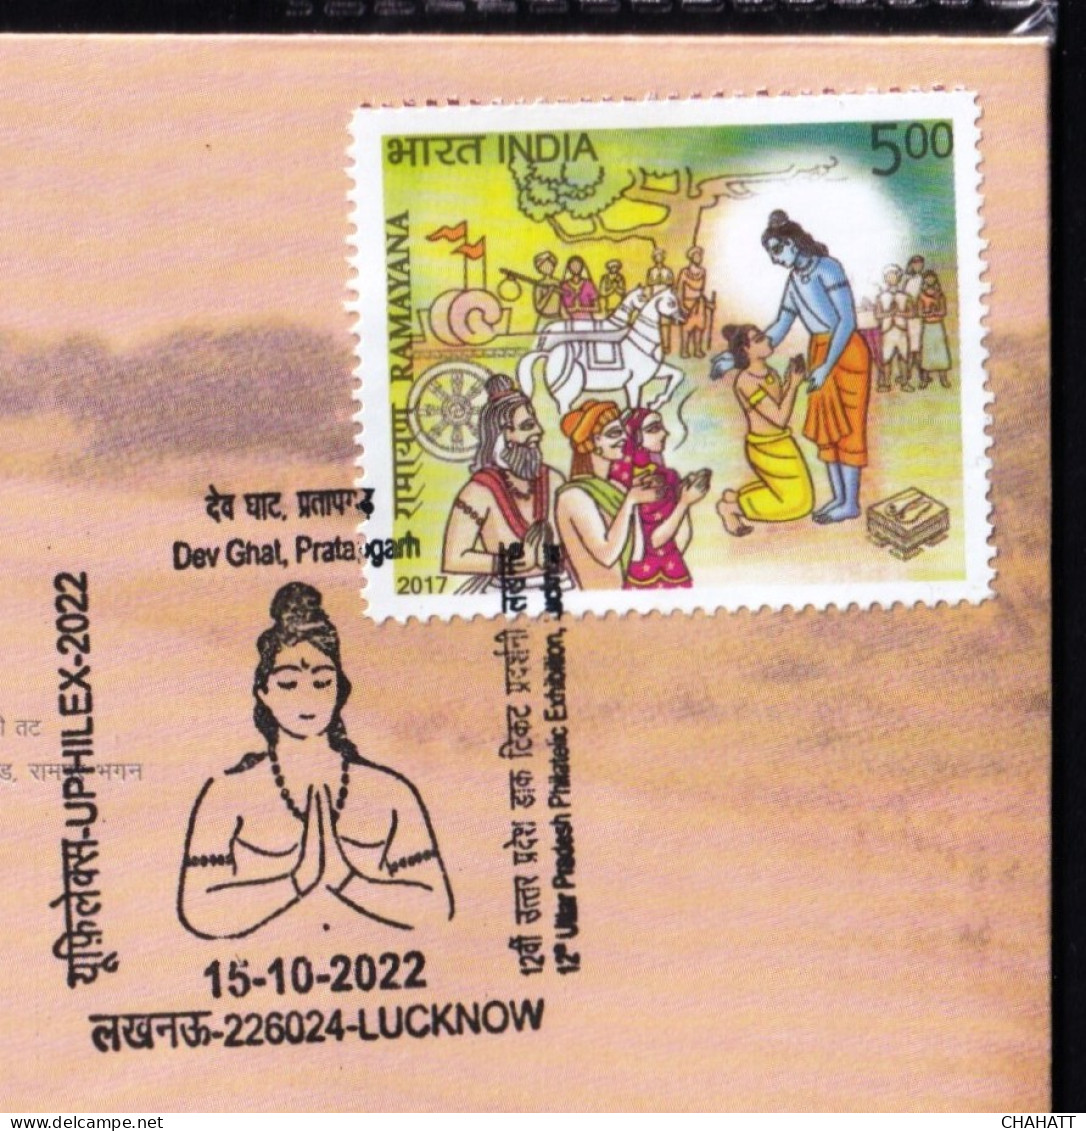 HINDUISM - RAMAYAN-  DEV GHAT, PRATAPGARH - PICTORIAL CANCELLATION - SPECIAL COVER - INDIA -2022- BX4-23 - Hinduismus